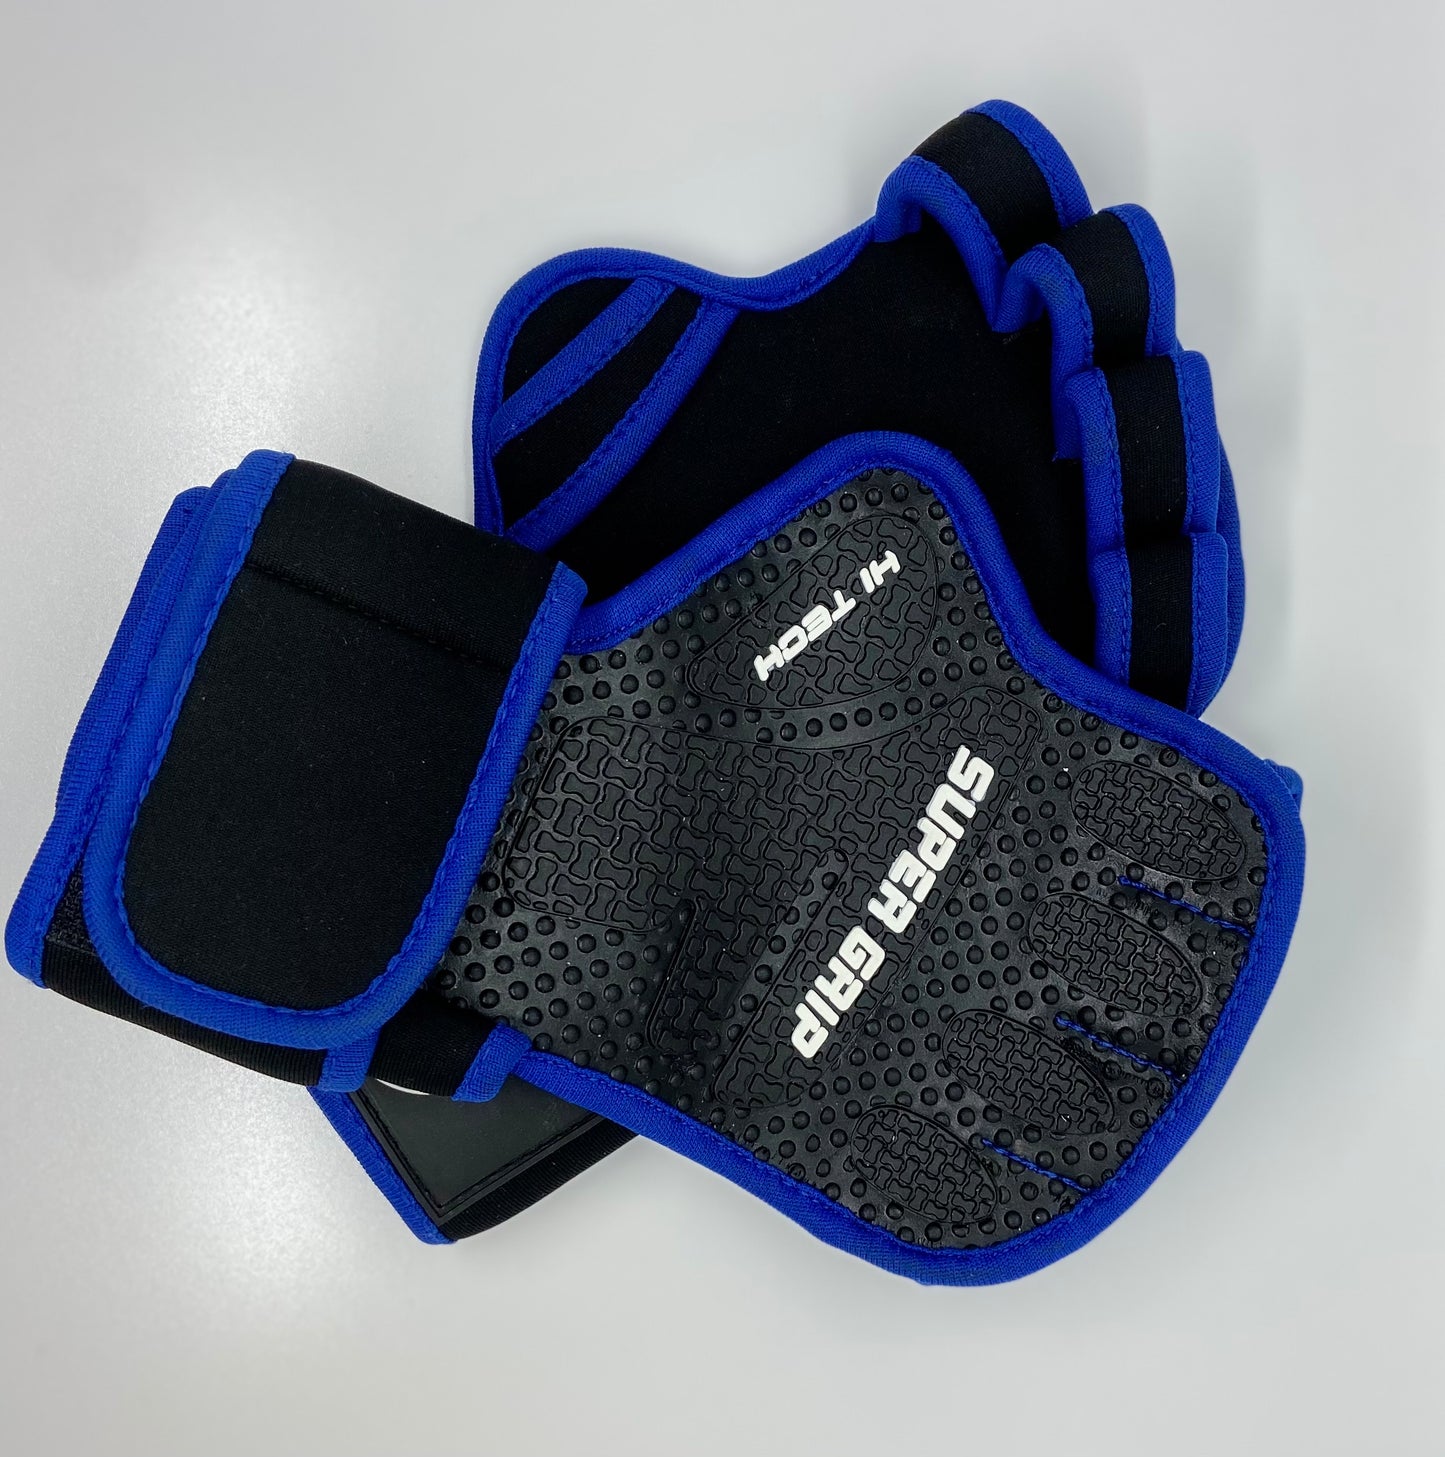 IAMELITE® Brand  Super Grip Weight Lifting Gloves